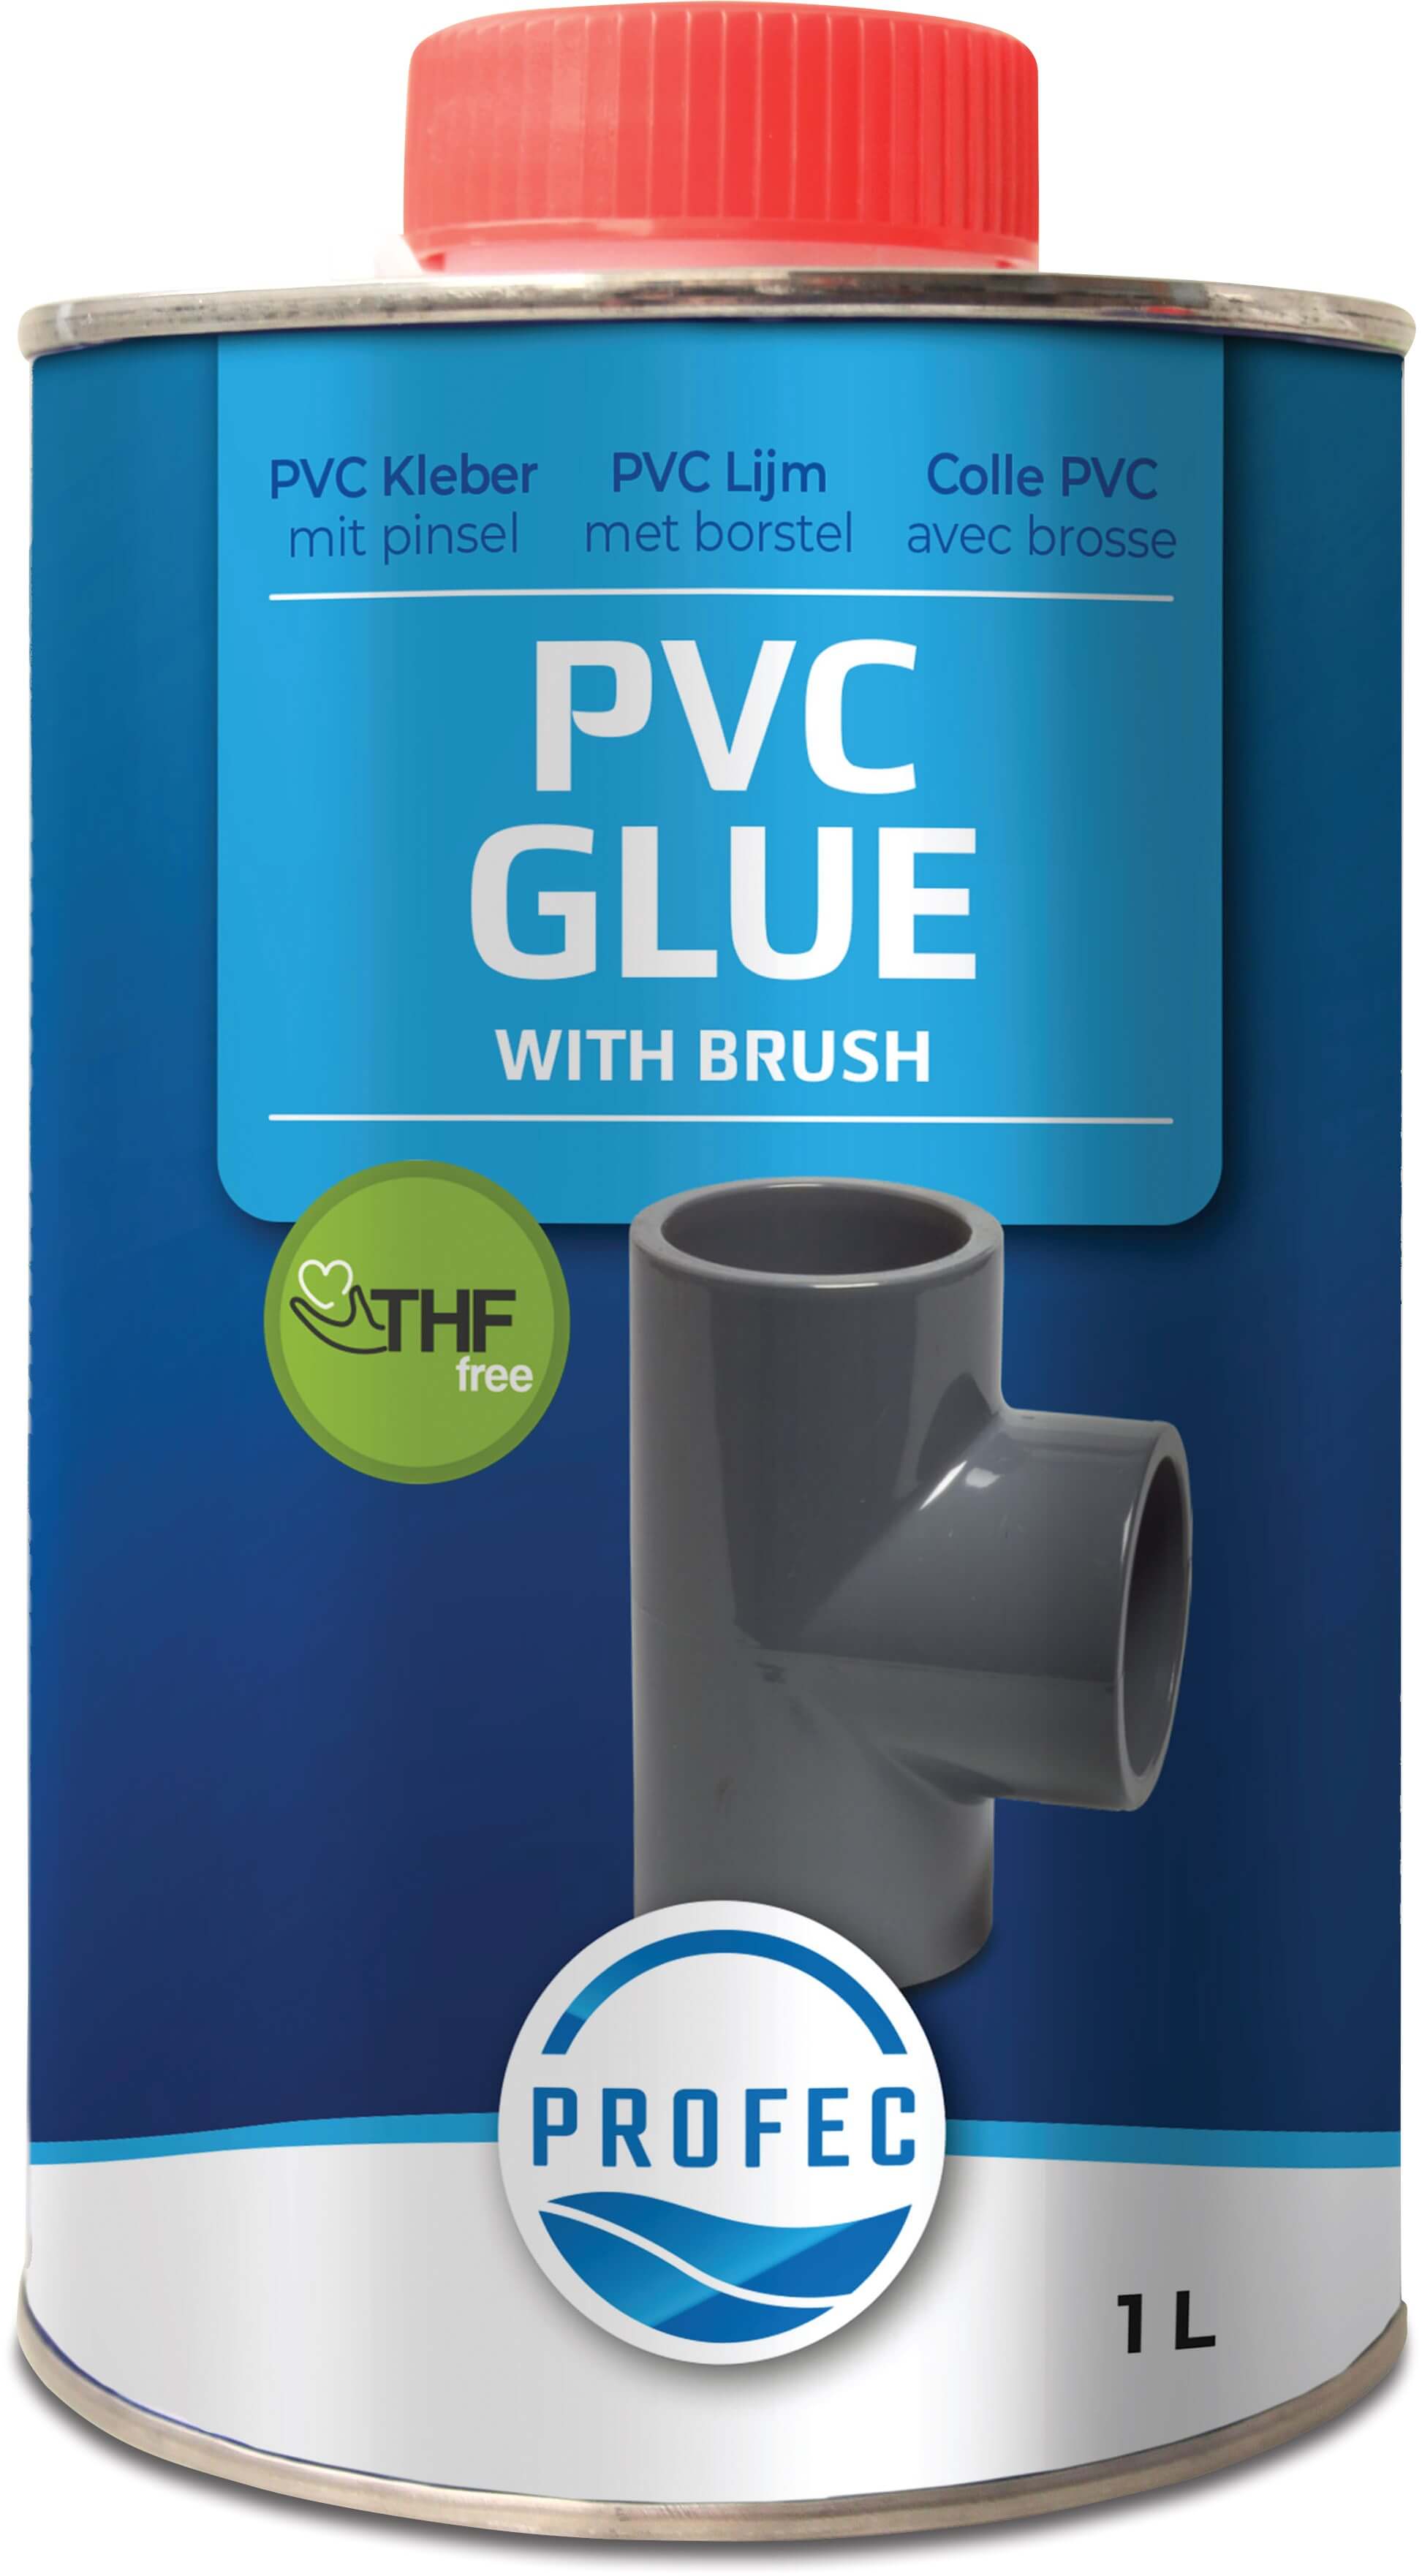 Profec PVC glue 0,5ltr with brush type THF free label EN/DE/NL/FR